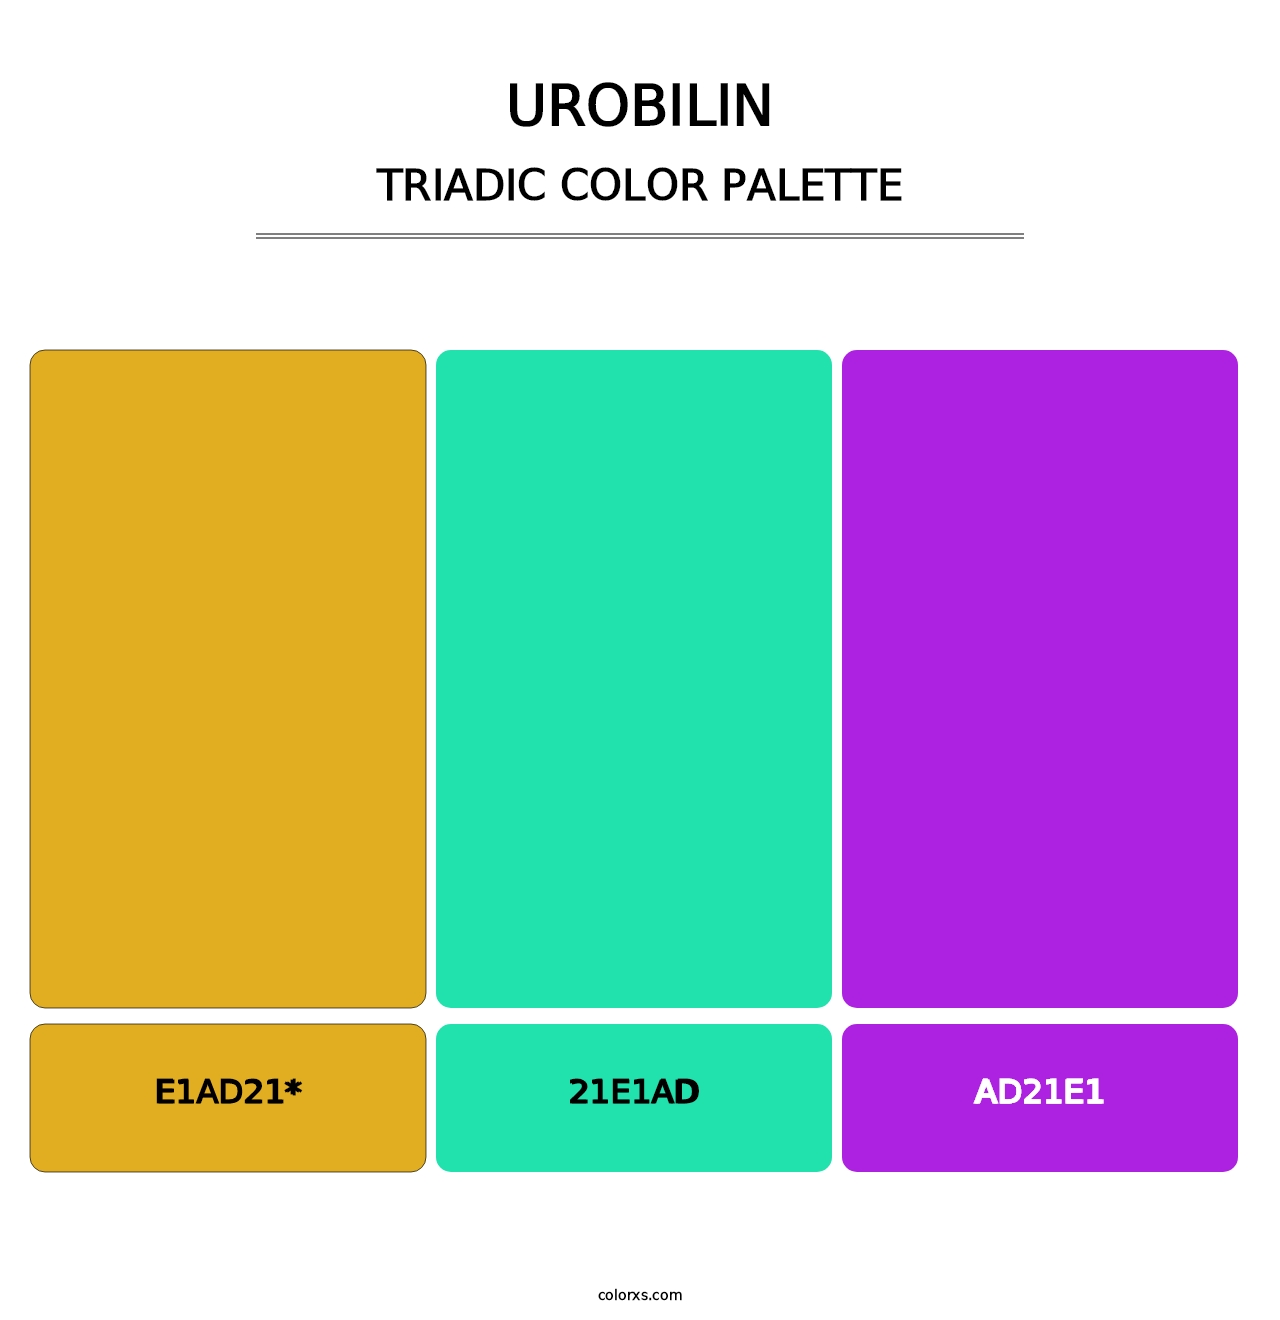 Urobilin - Triadic Color Palette